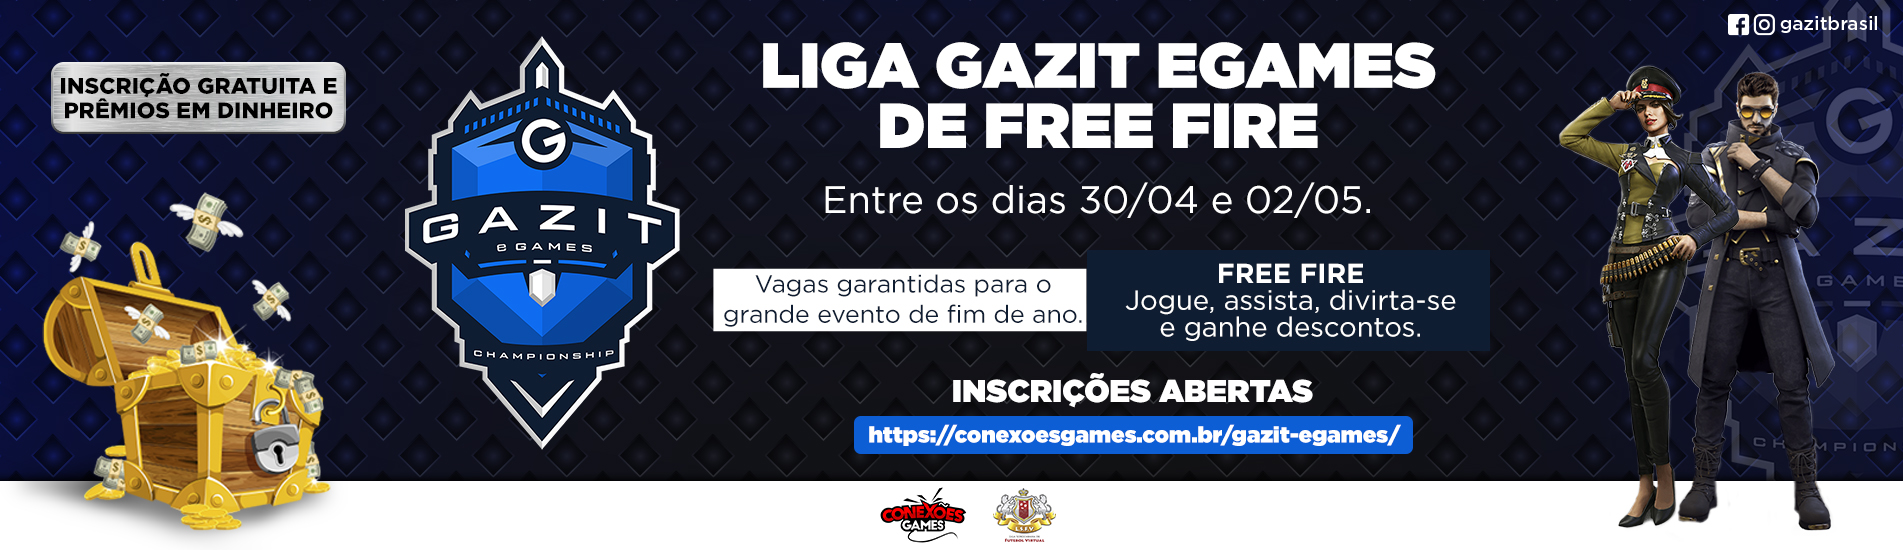 Gazit E-Games Free Fire